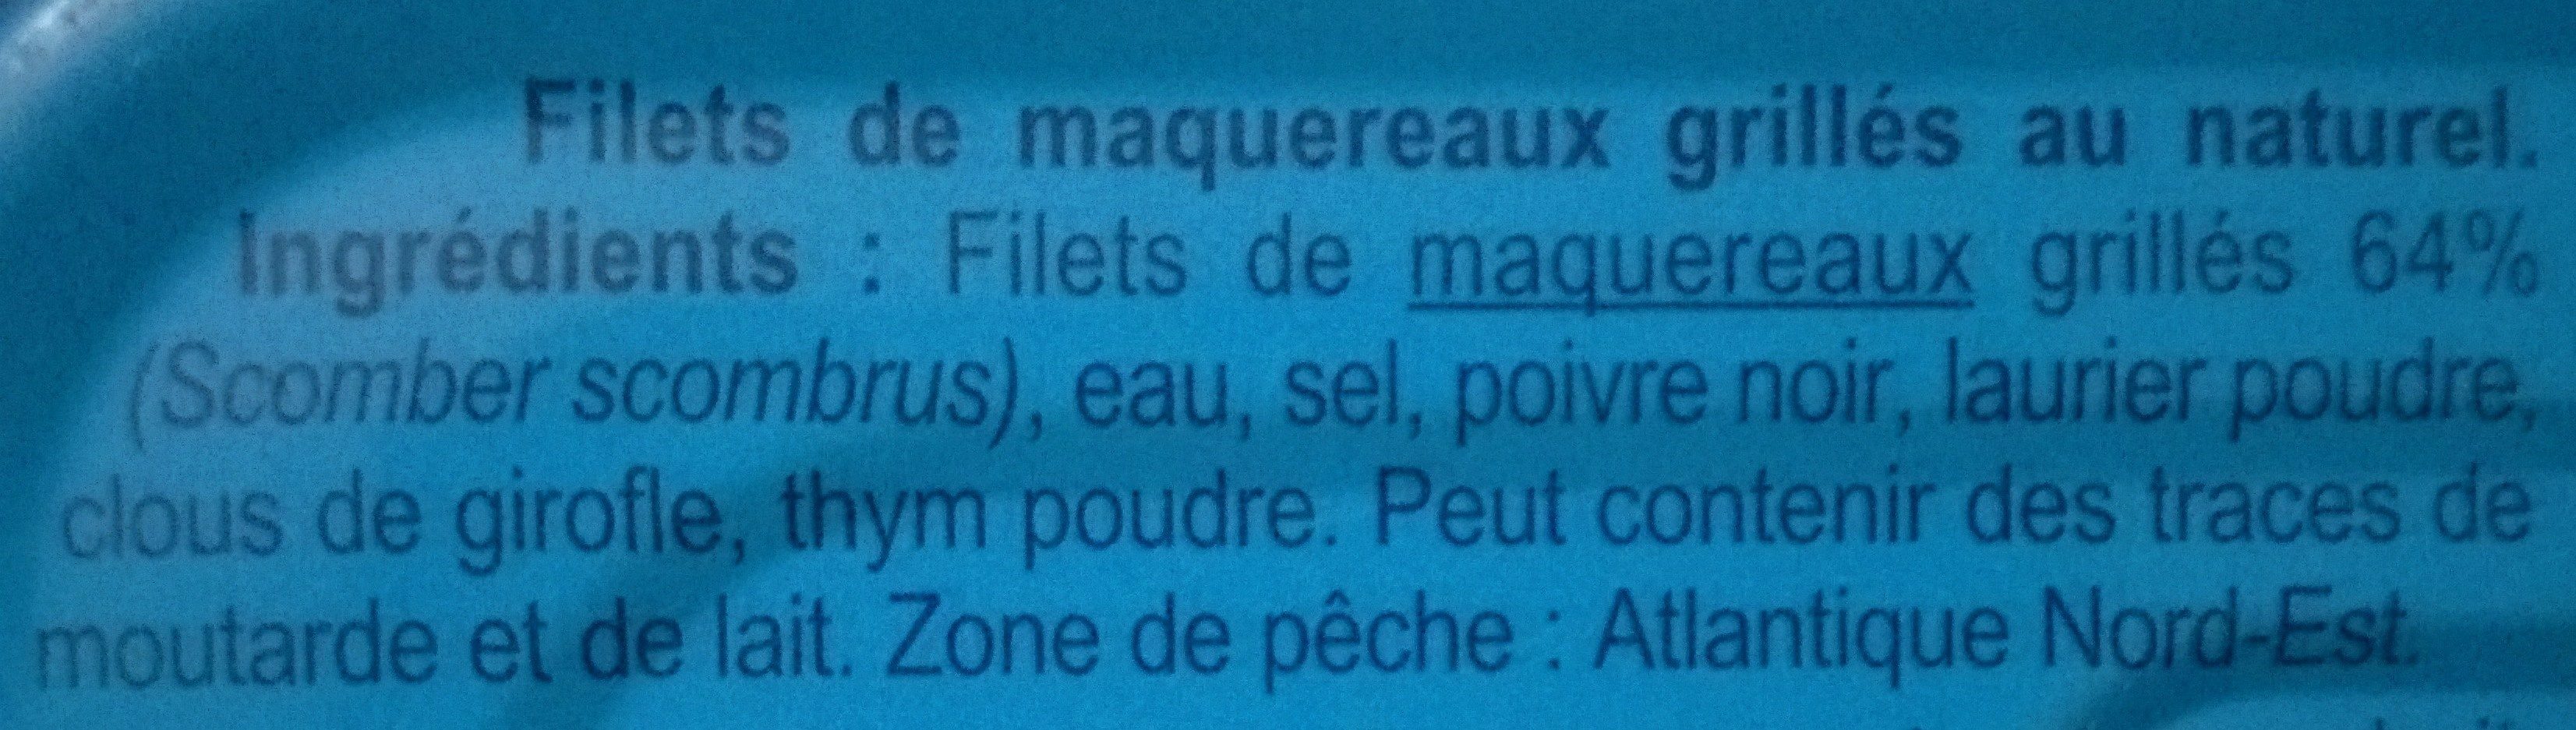 Filets de Maquereaux Grillés - Ingrediënten - fr